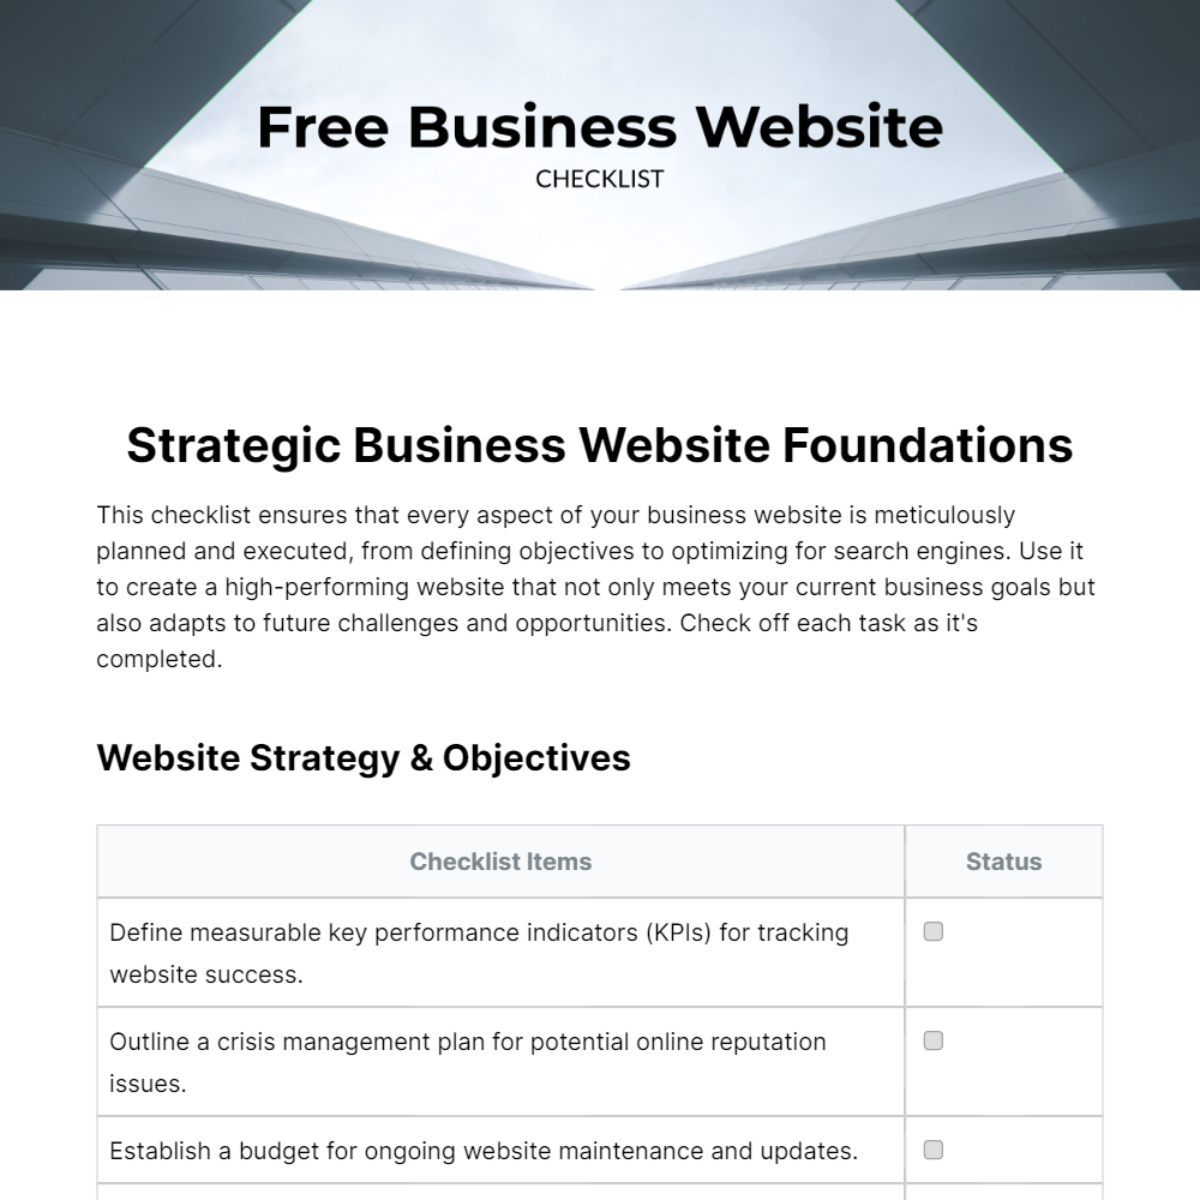 Free Business Website Checklist Template